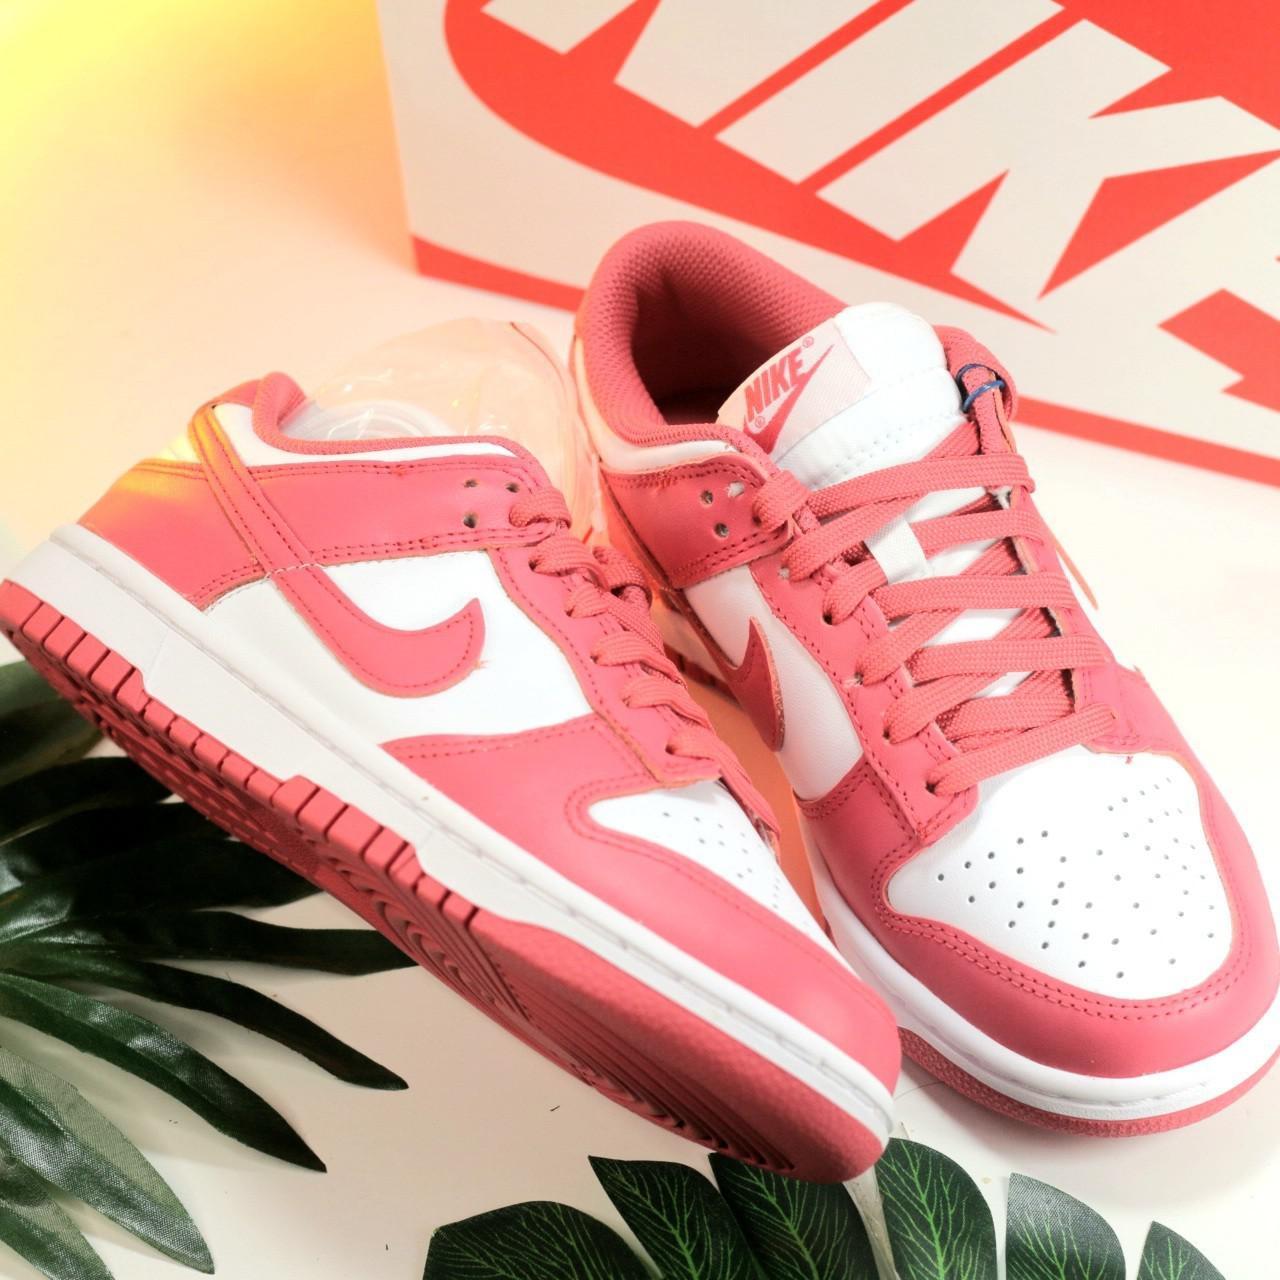 Name: Nike Dunk Low Pink size 6.5y/8W/39EU - Depop